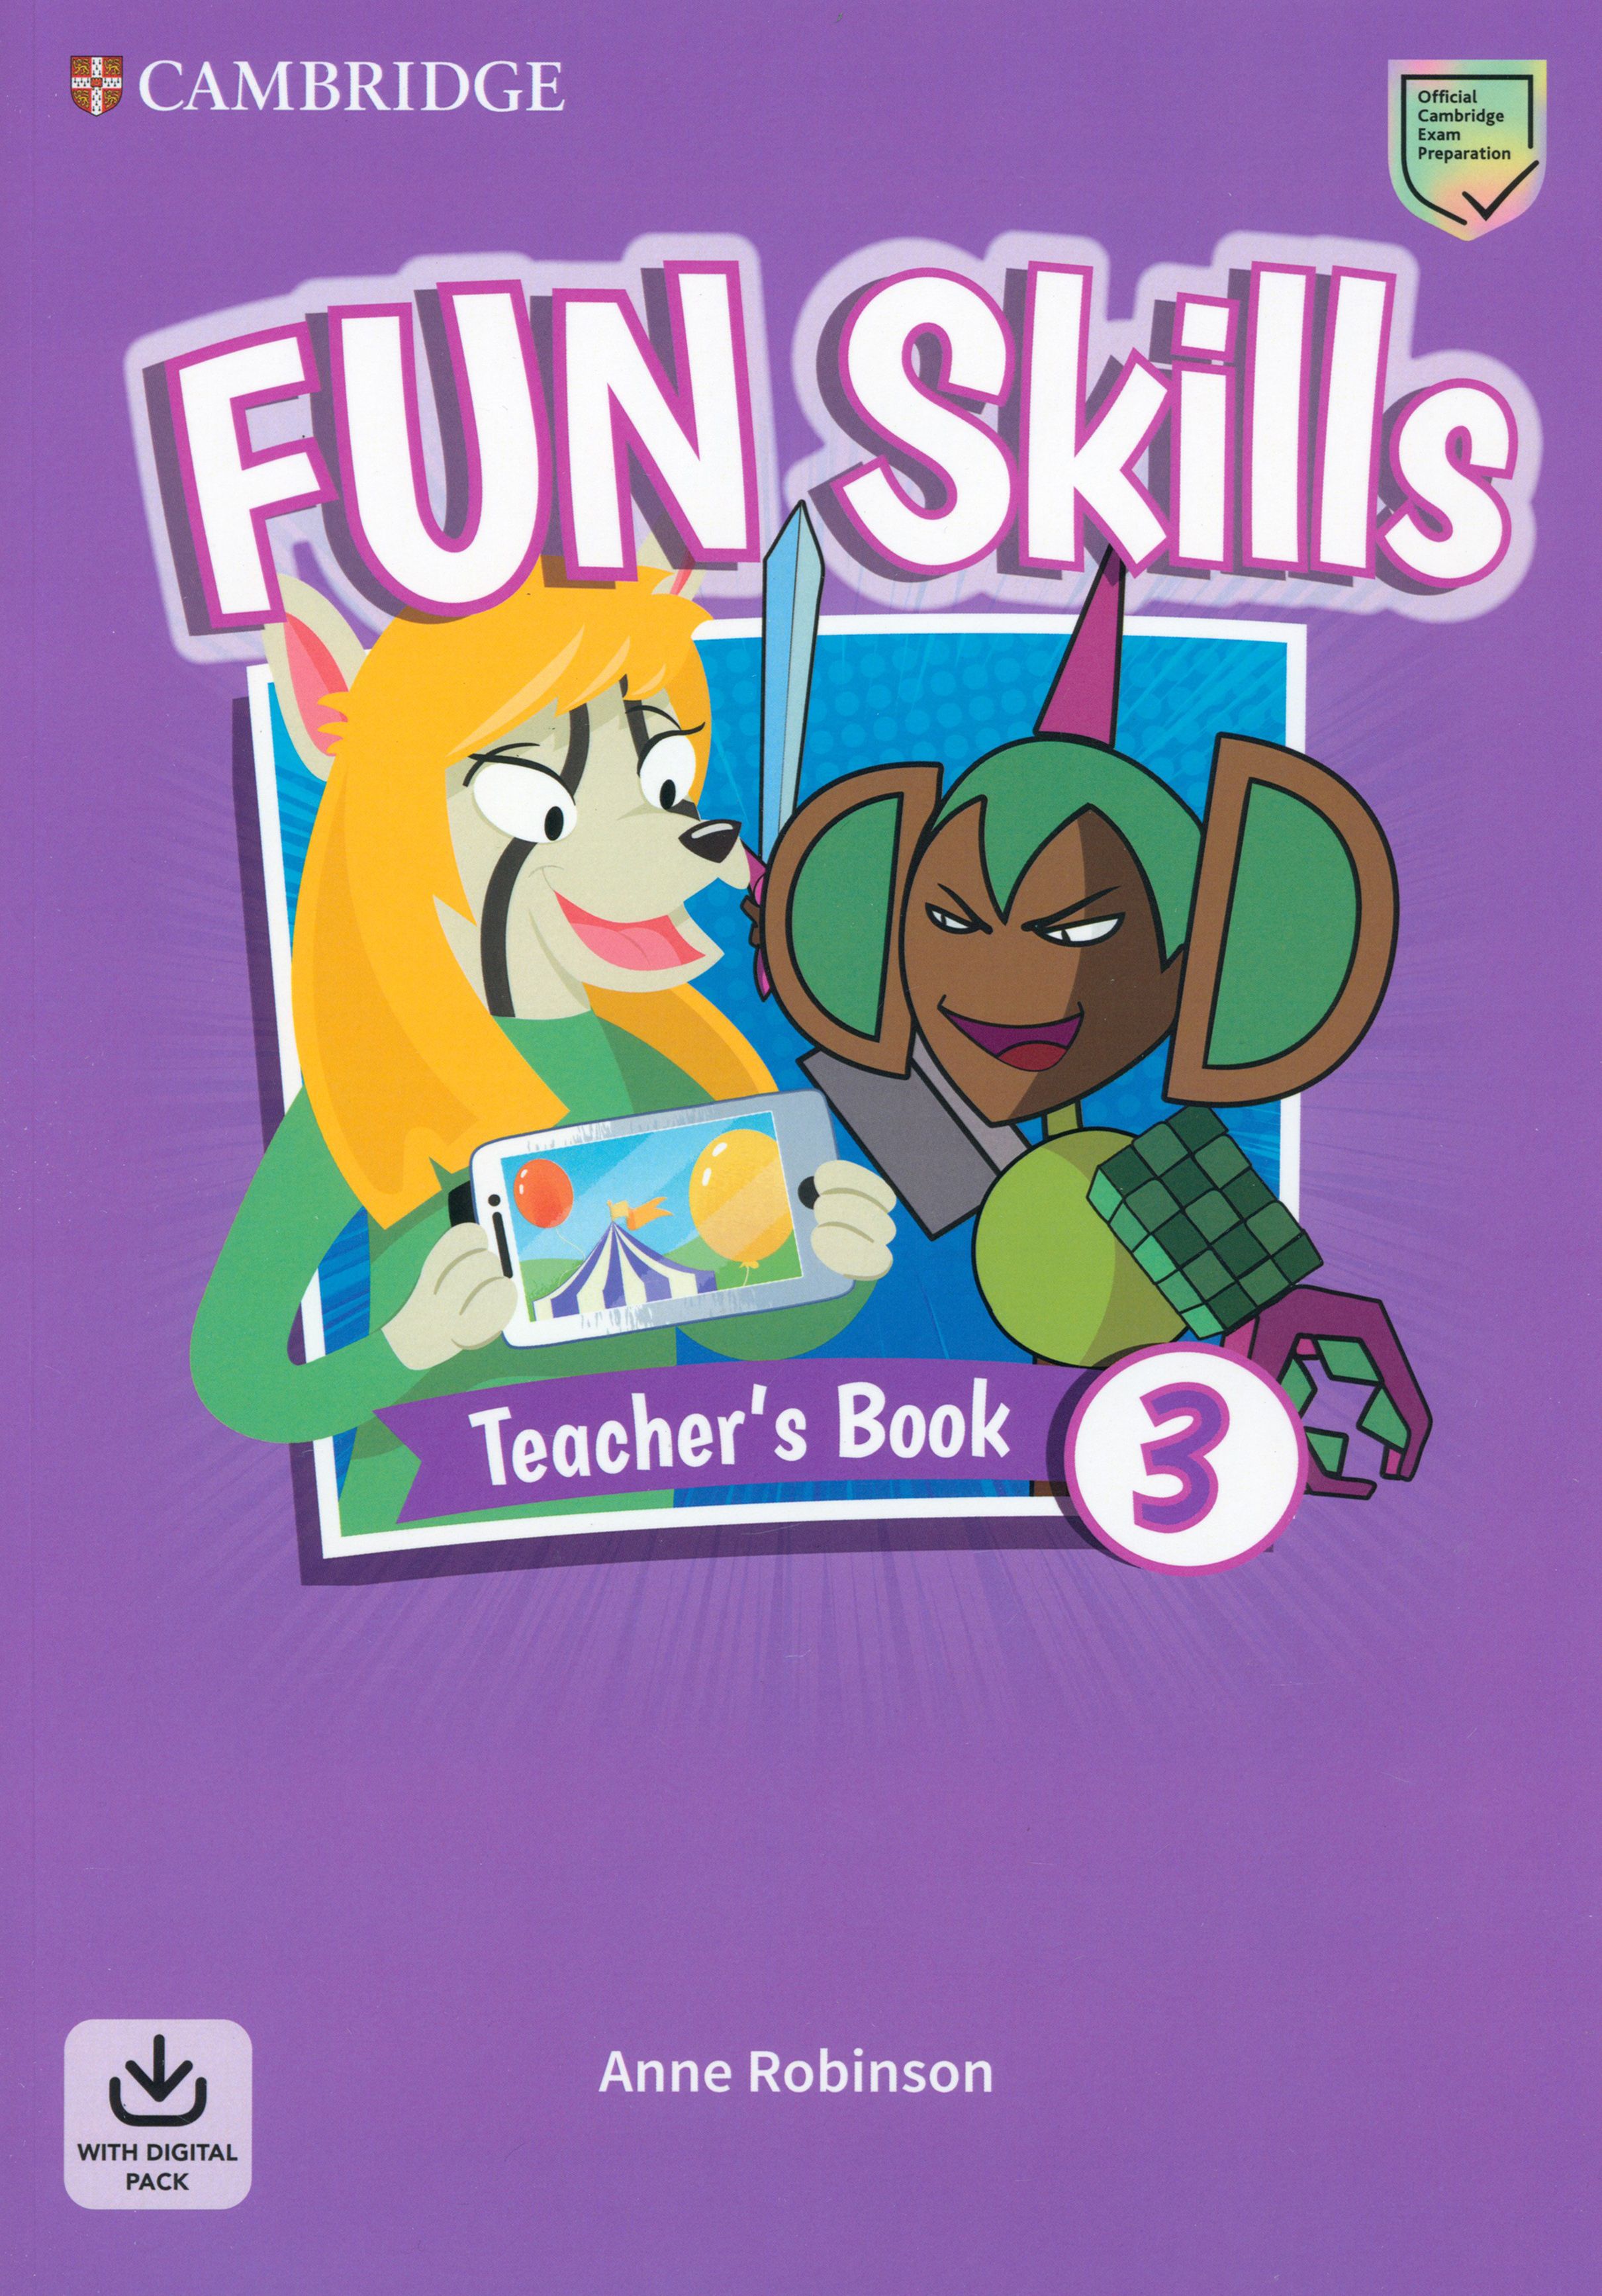 Fun skills. Fun skills Cambridge. Fun skills 3. Fun skills 1 student's book. Prepare 3 teachers